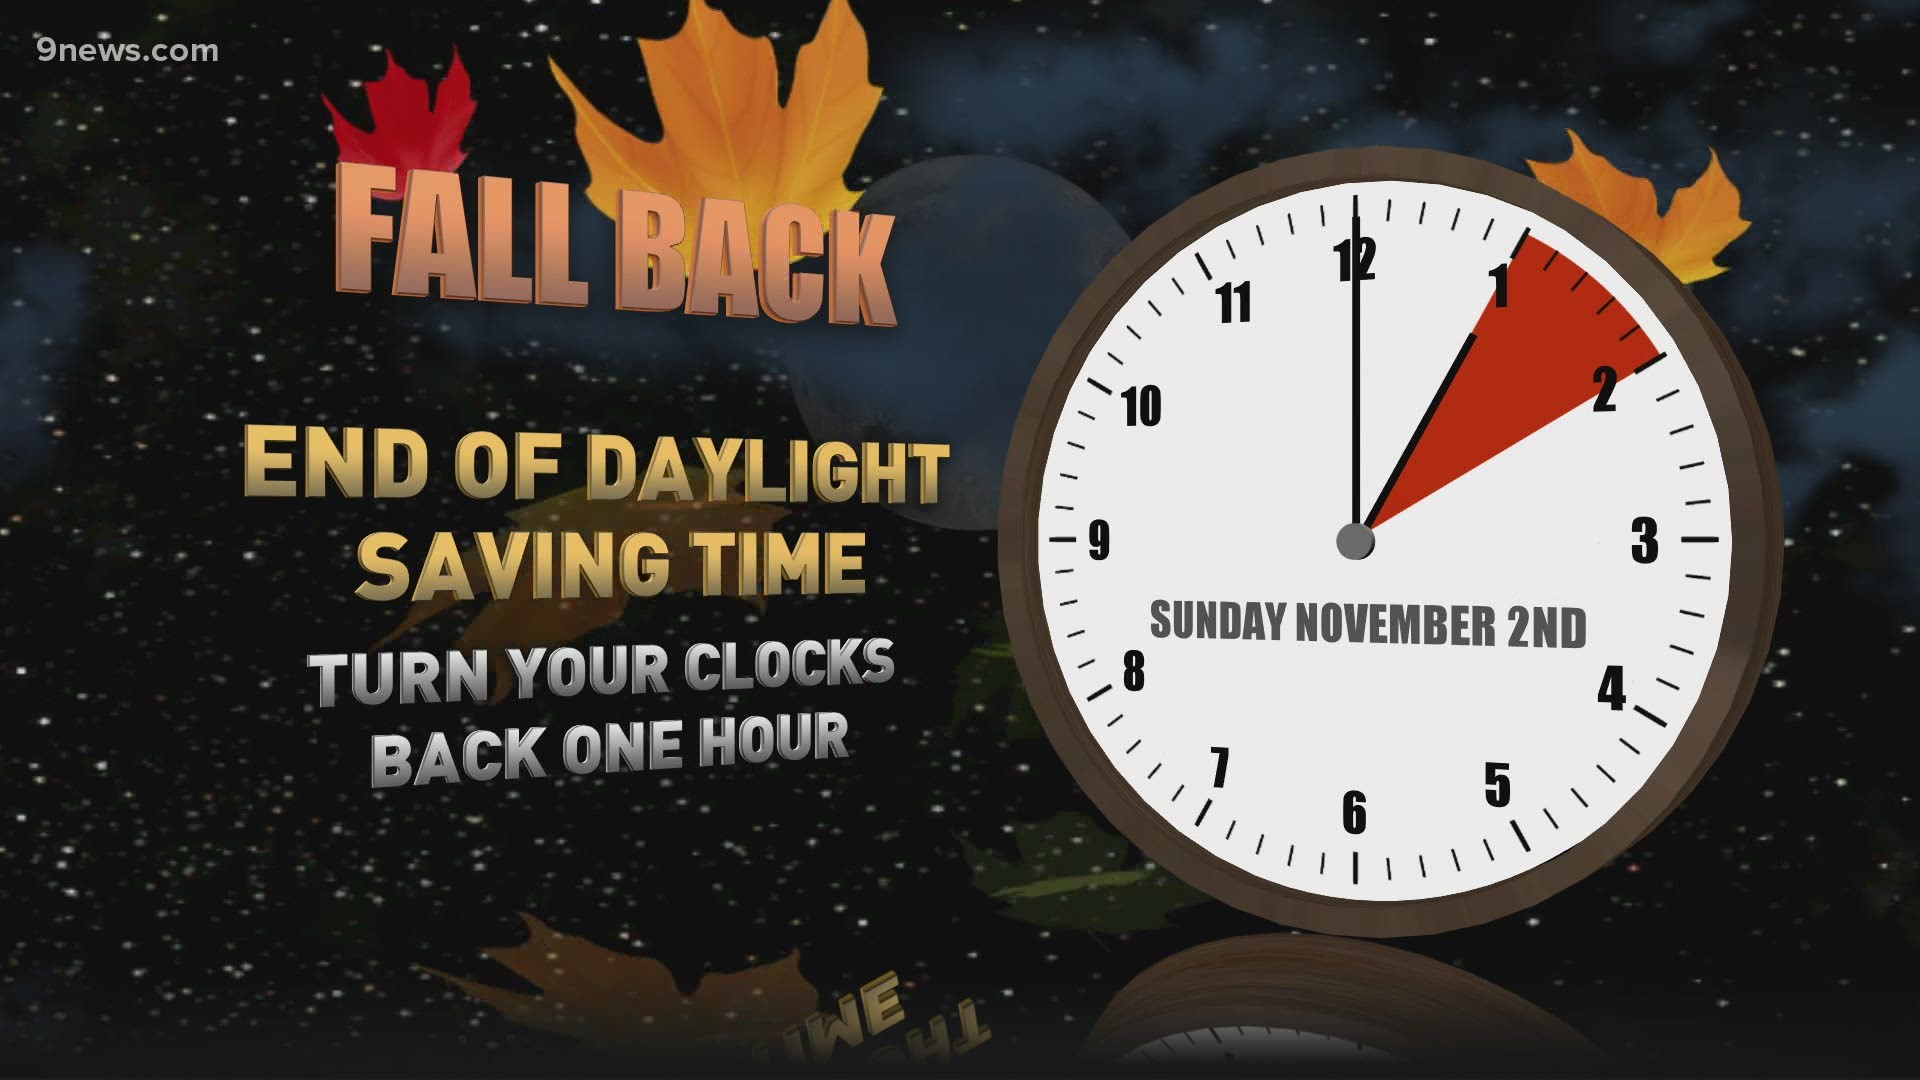 Set your clocks back an hour tonight.